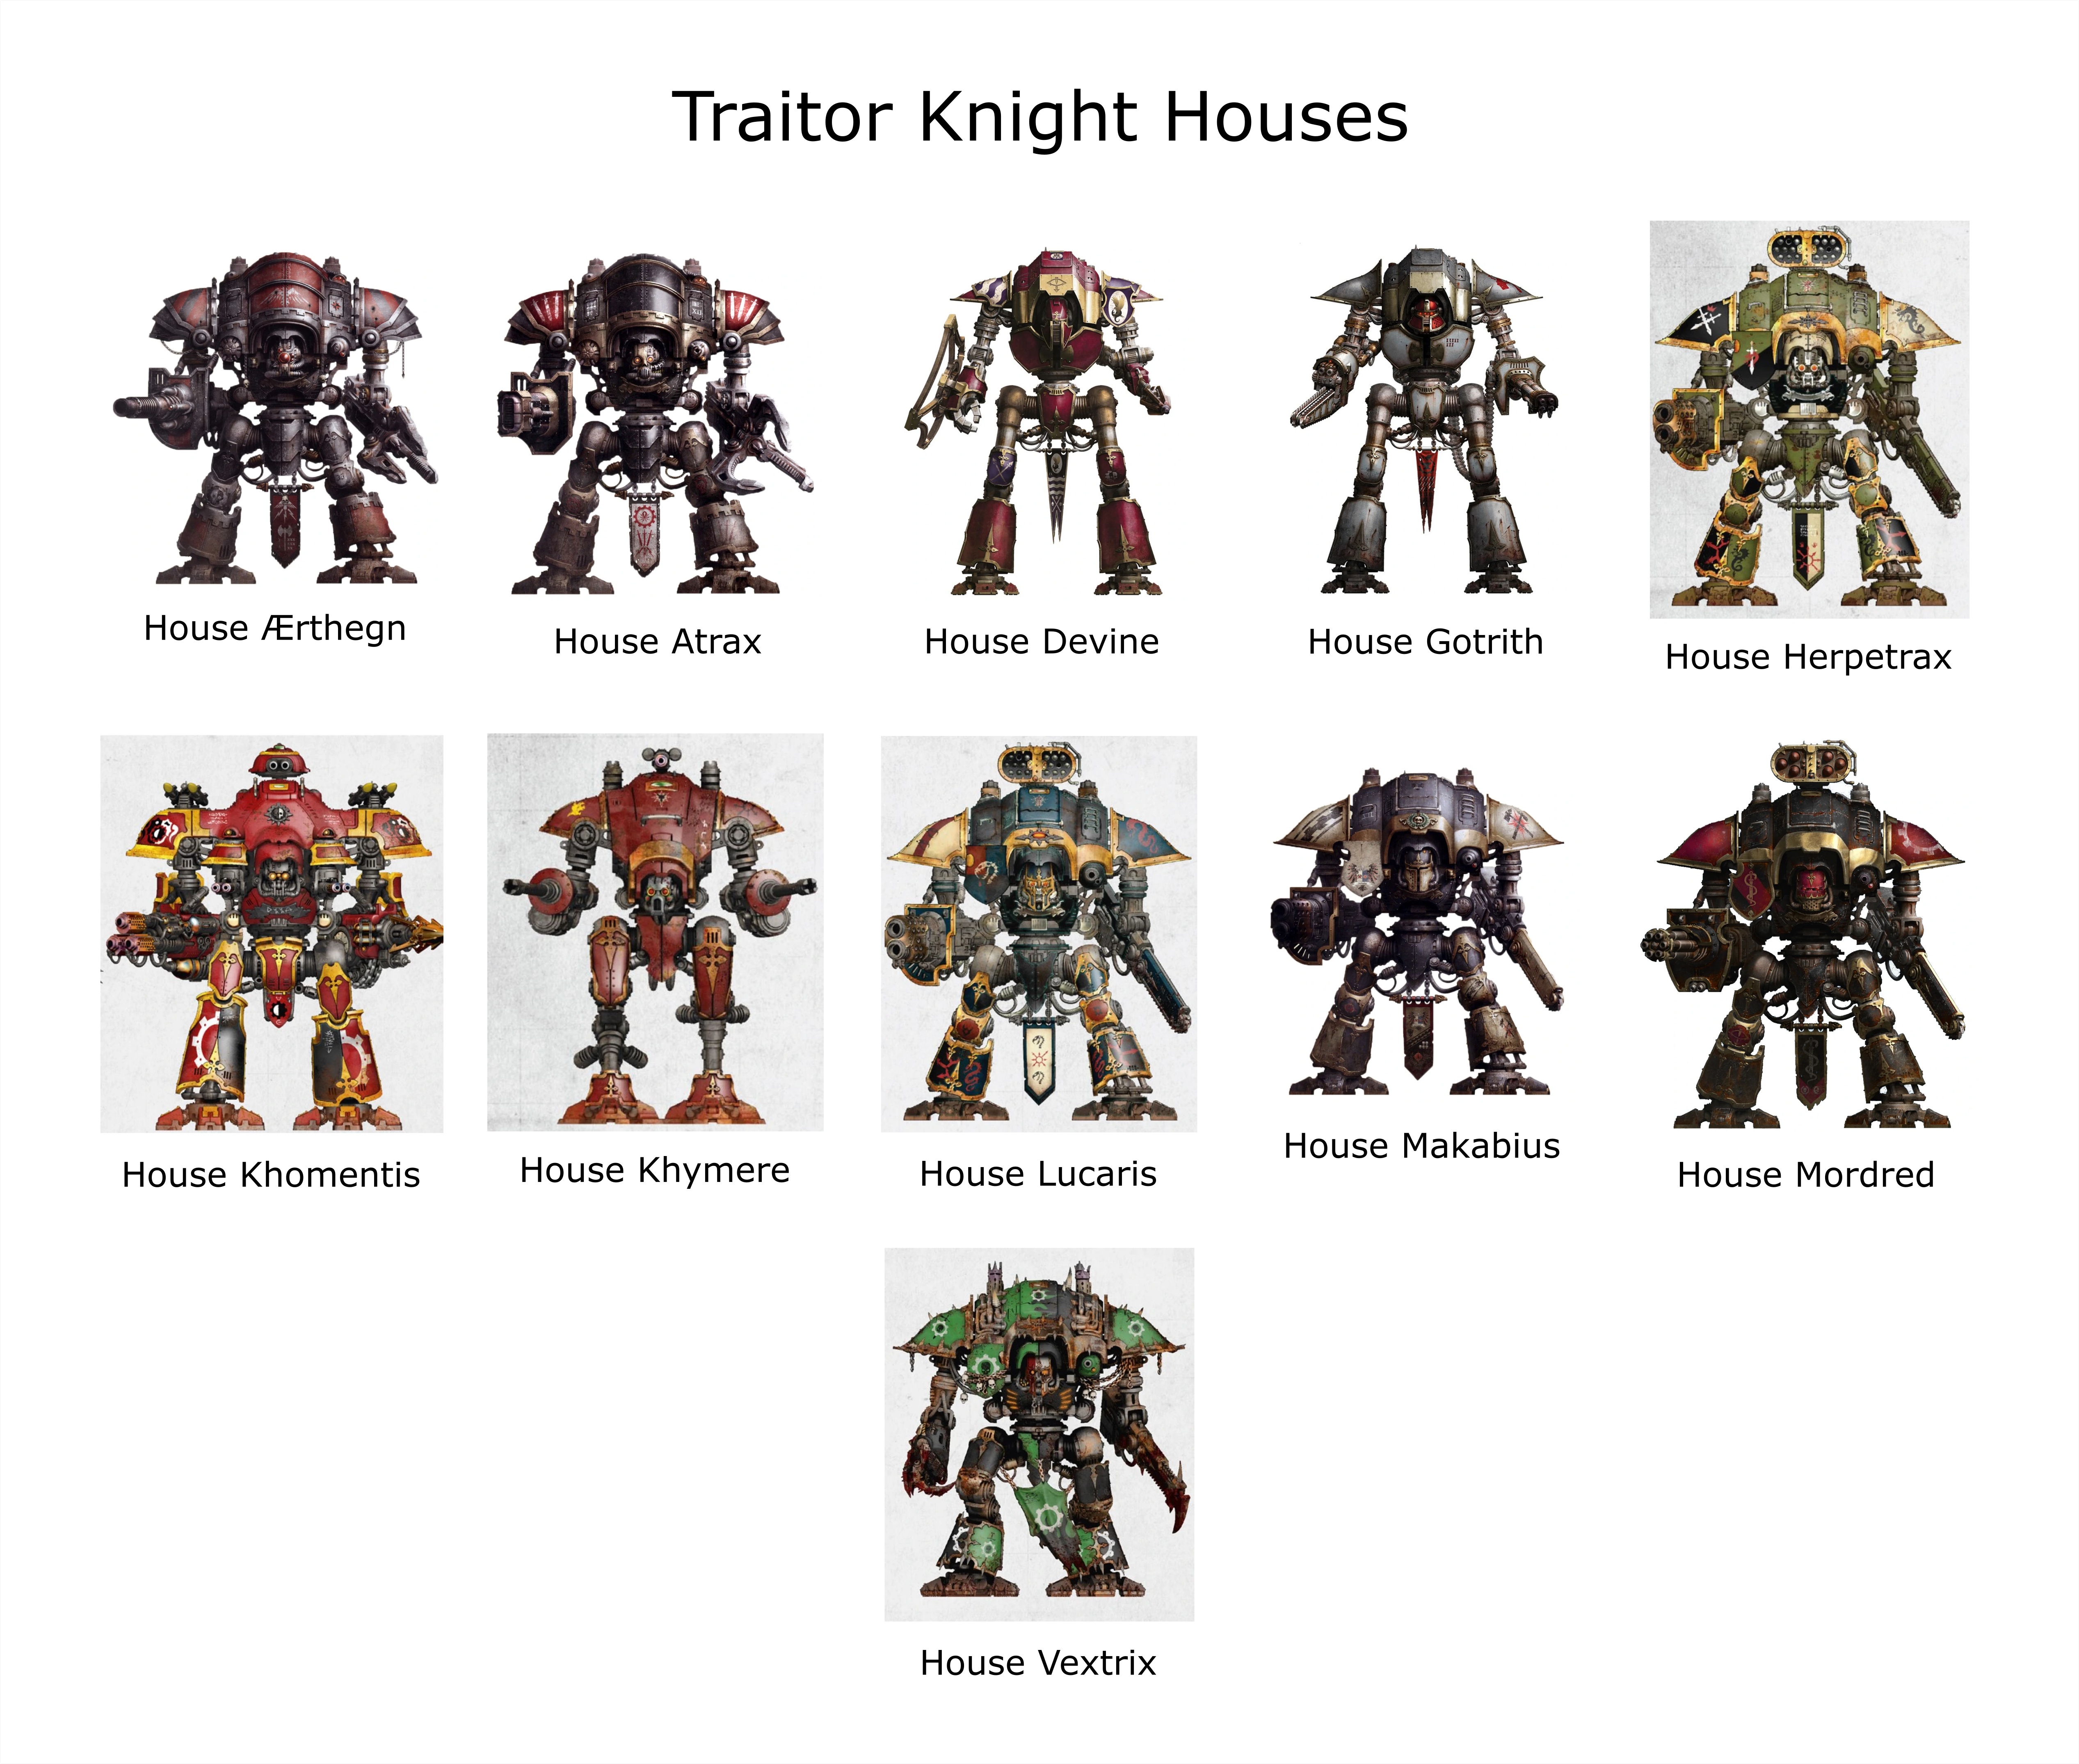 titan legion colour schemes